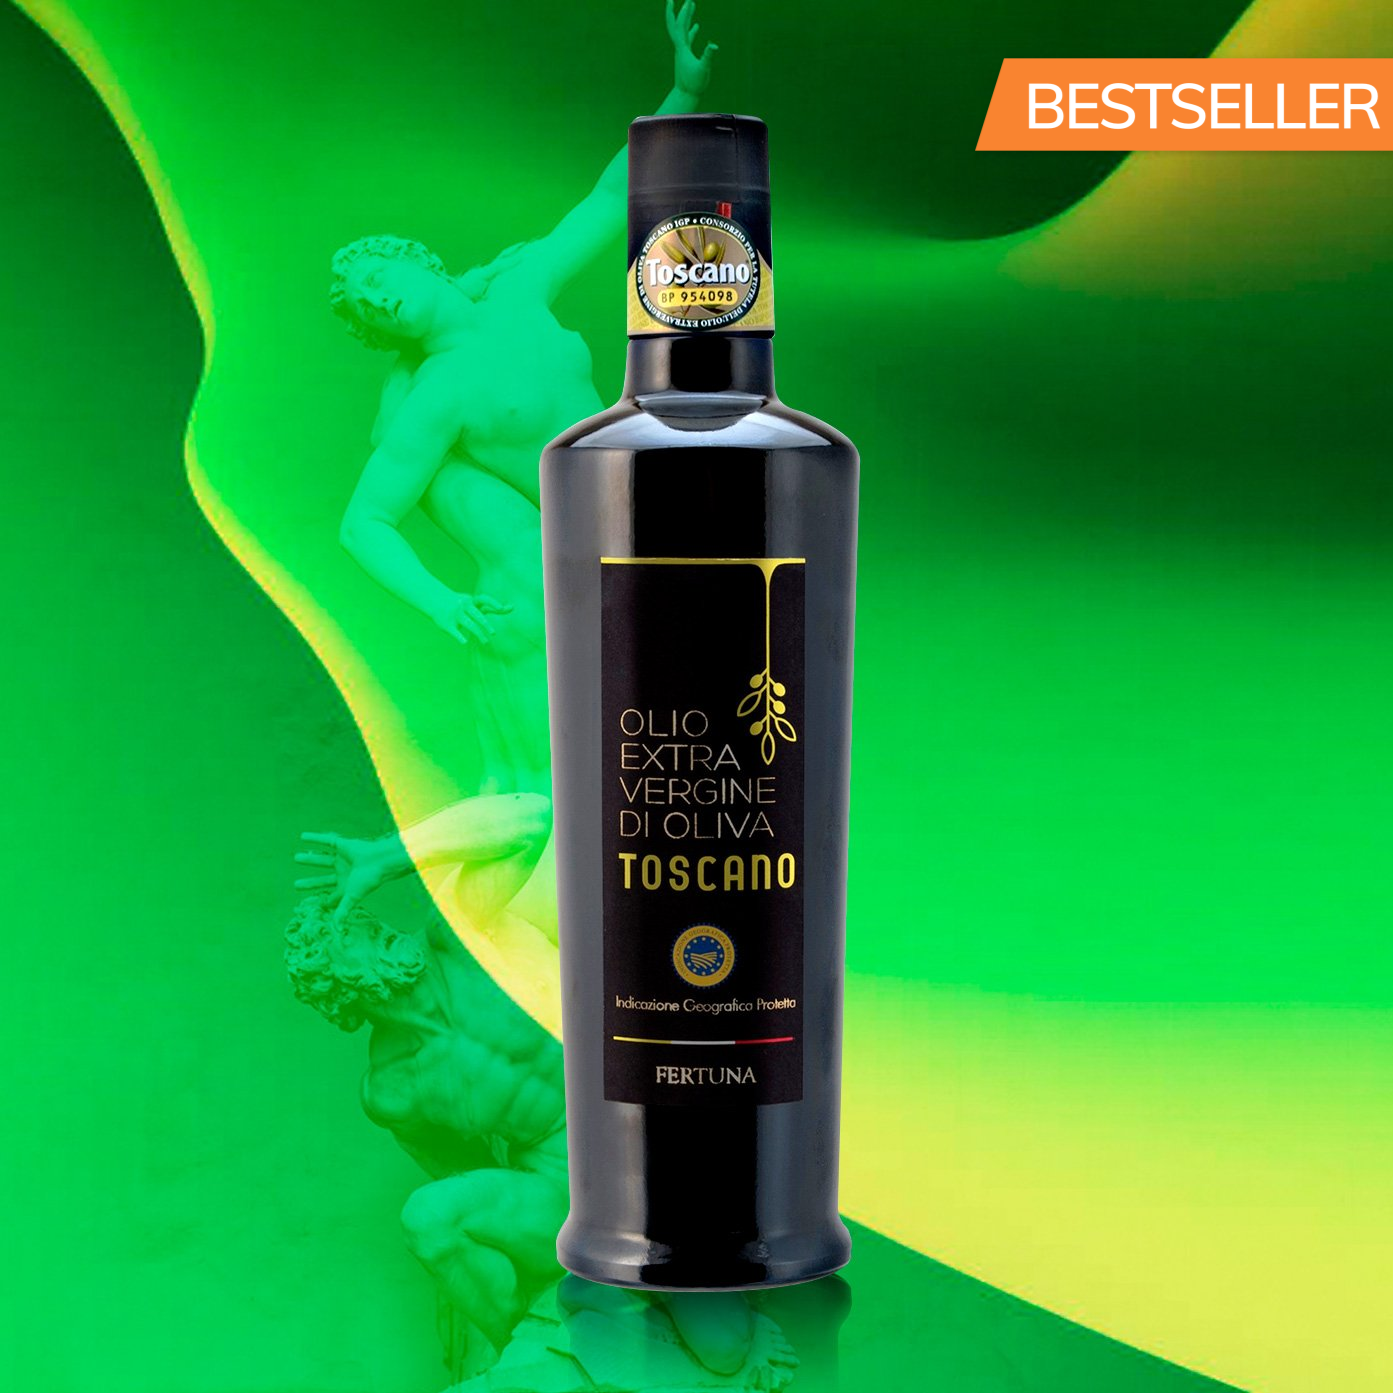 'Maremma Toscana' Tuscan Extra Virgin Olive OIl IGP